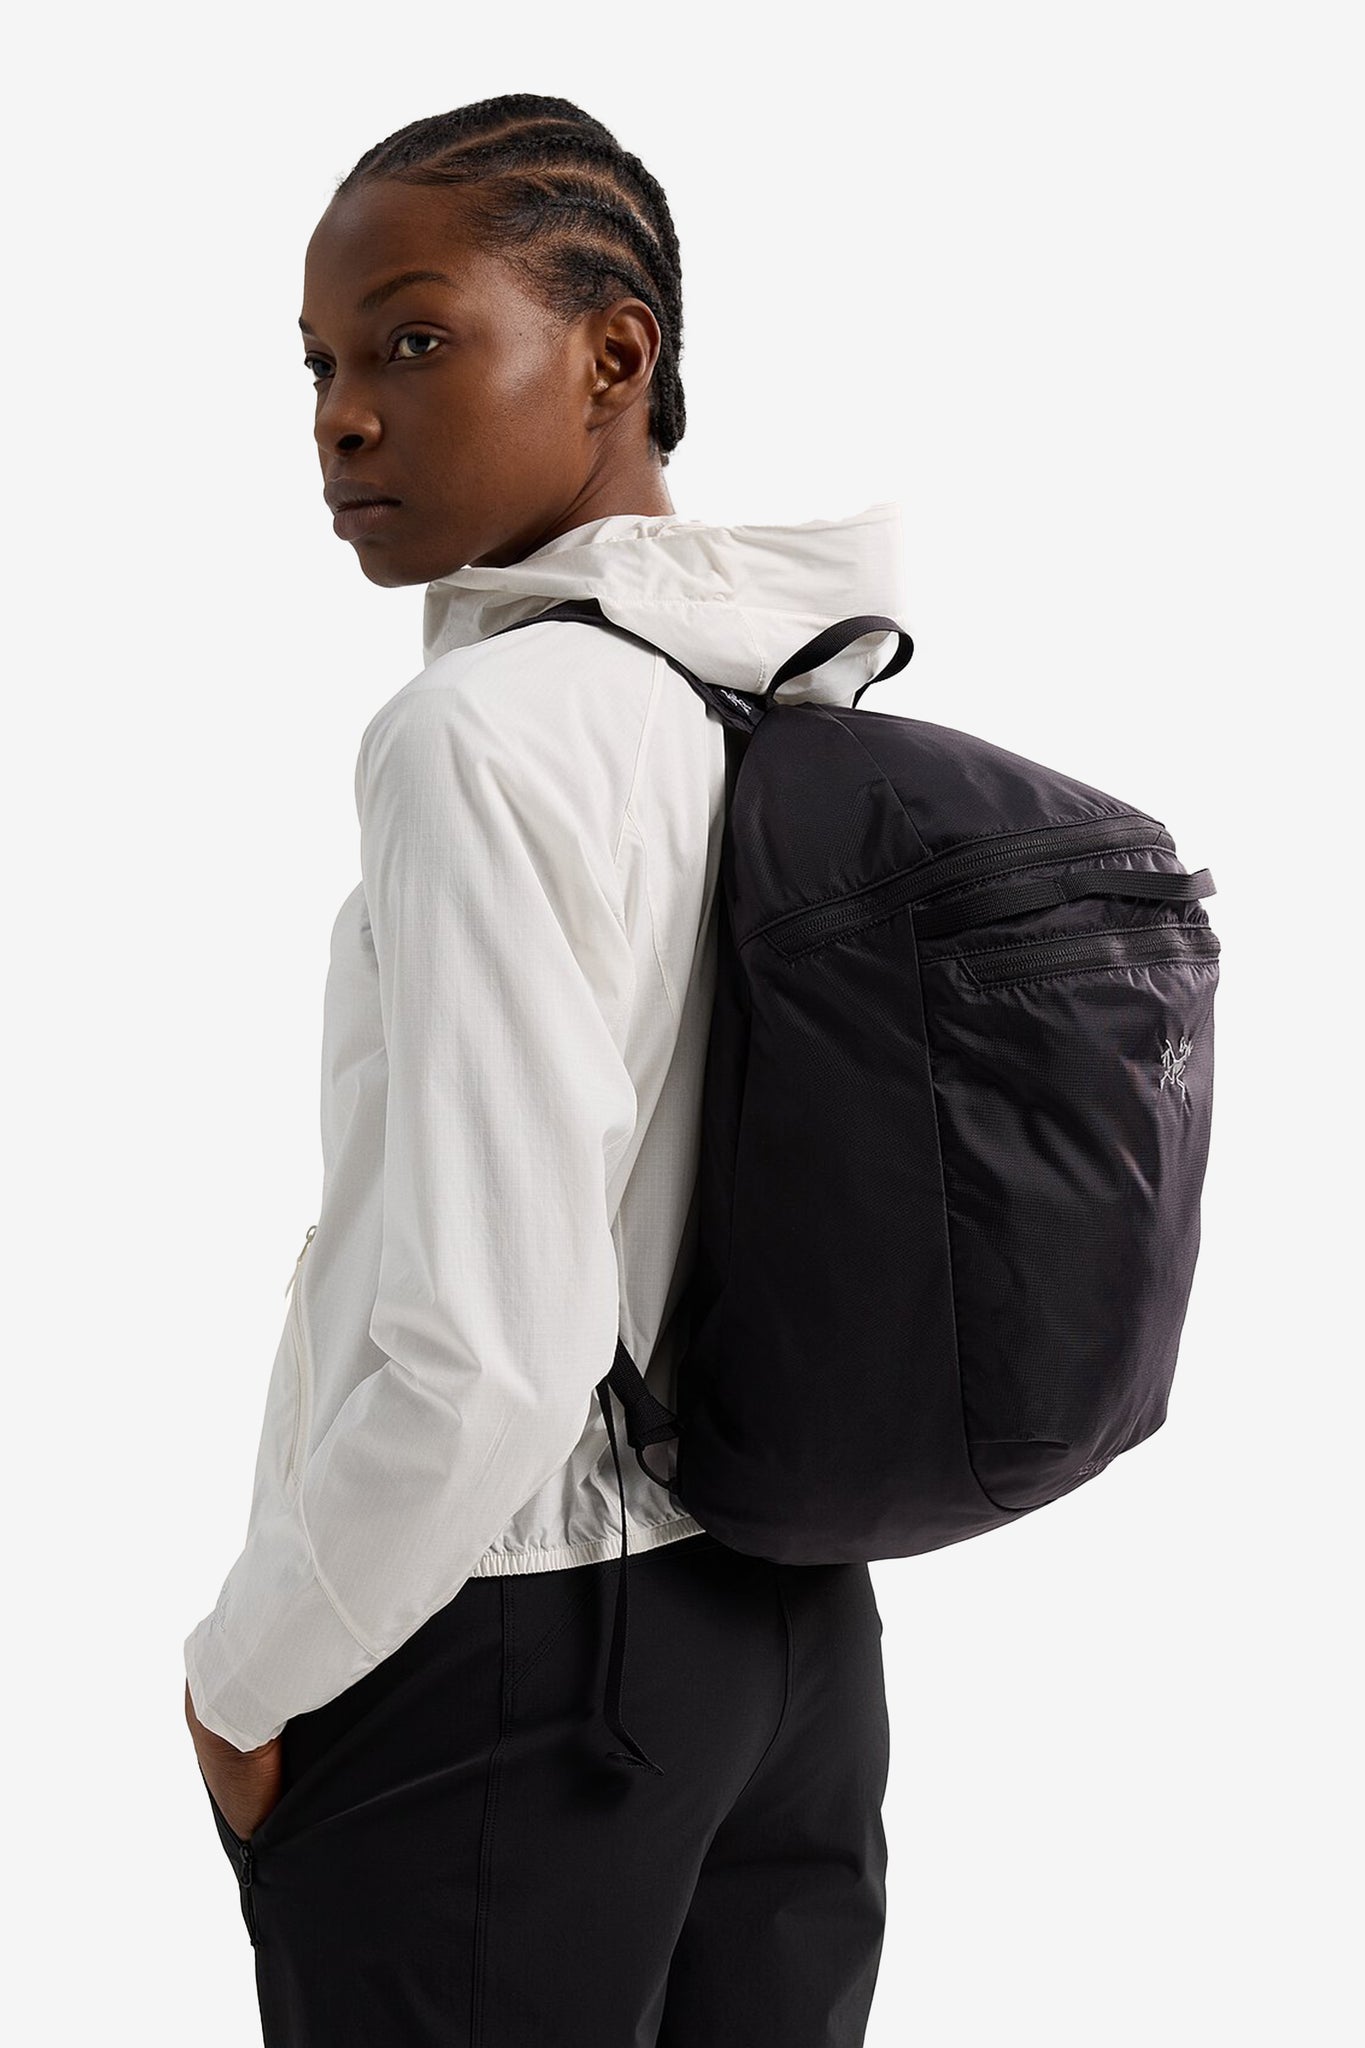 Arc'teryx Unisex Heliad 15L Backpack in Black